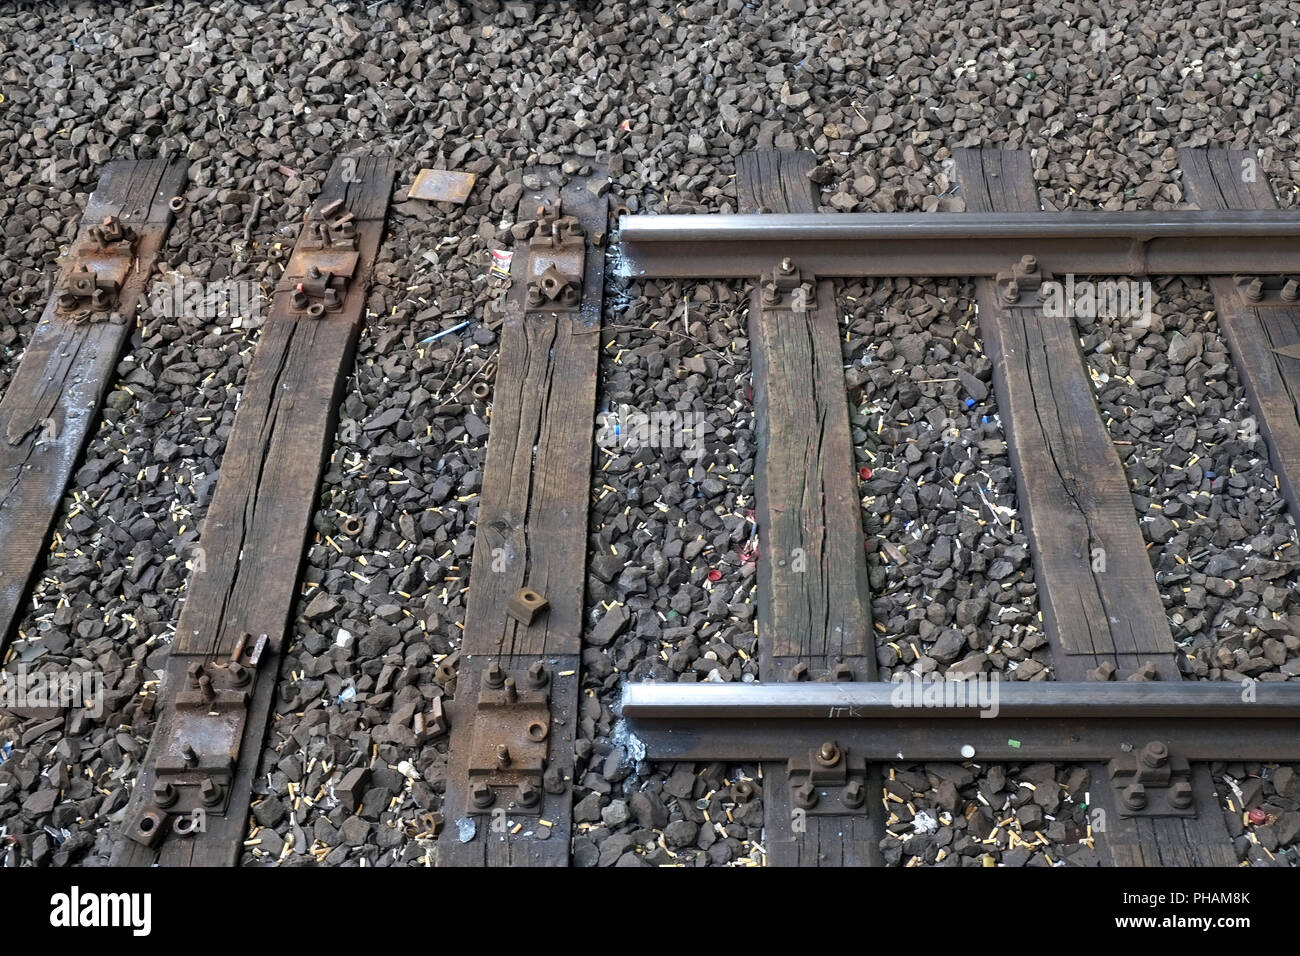 Cut-off di binari ferroviari, via costruzione Foto Stock